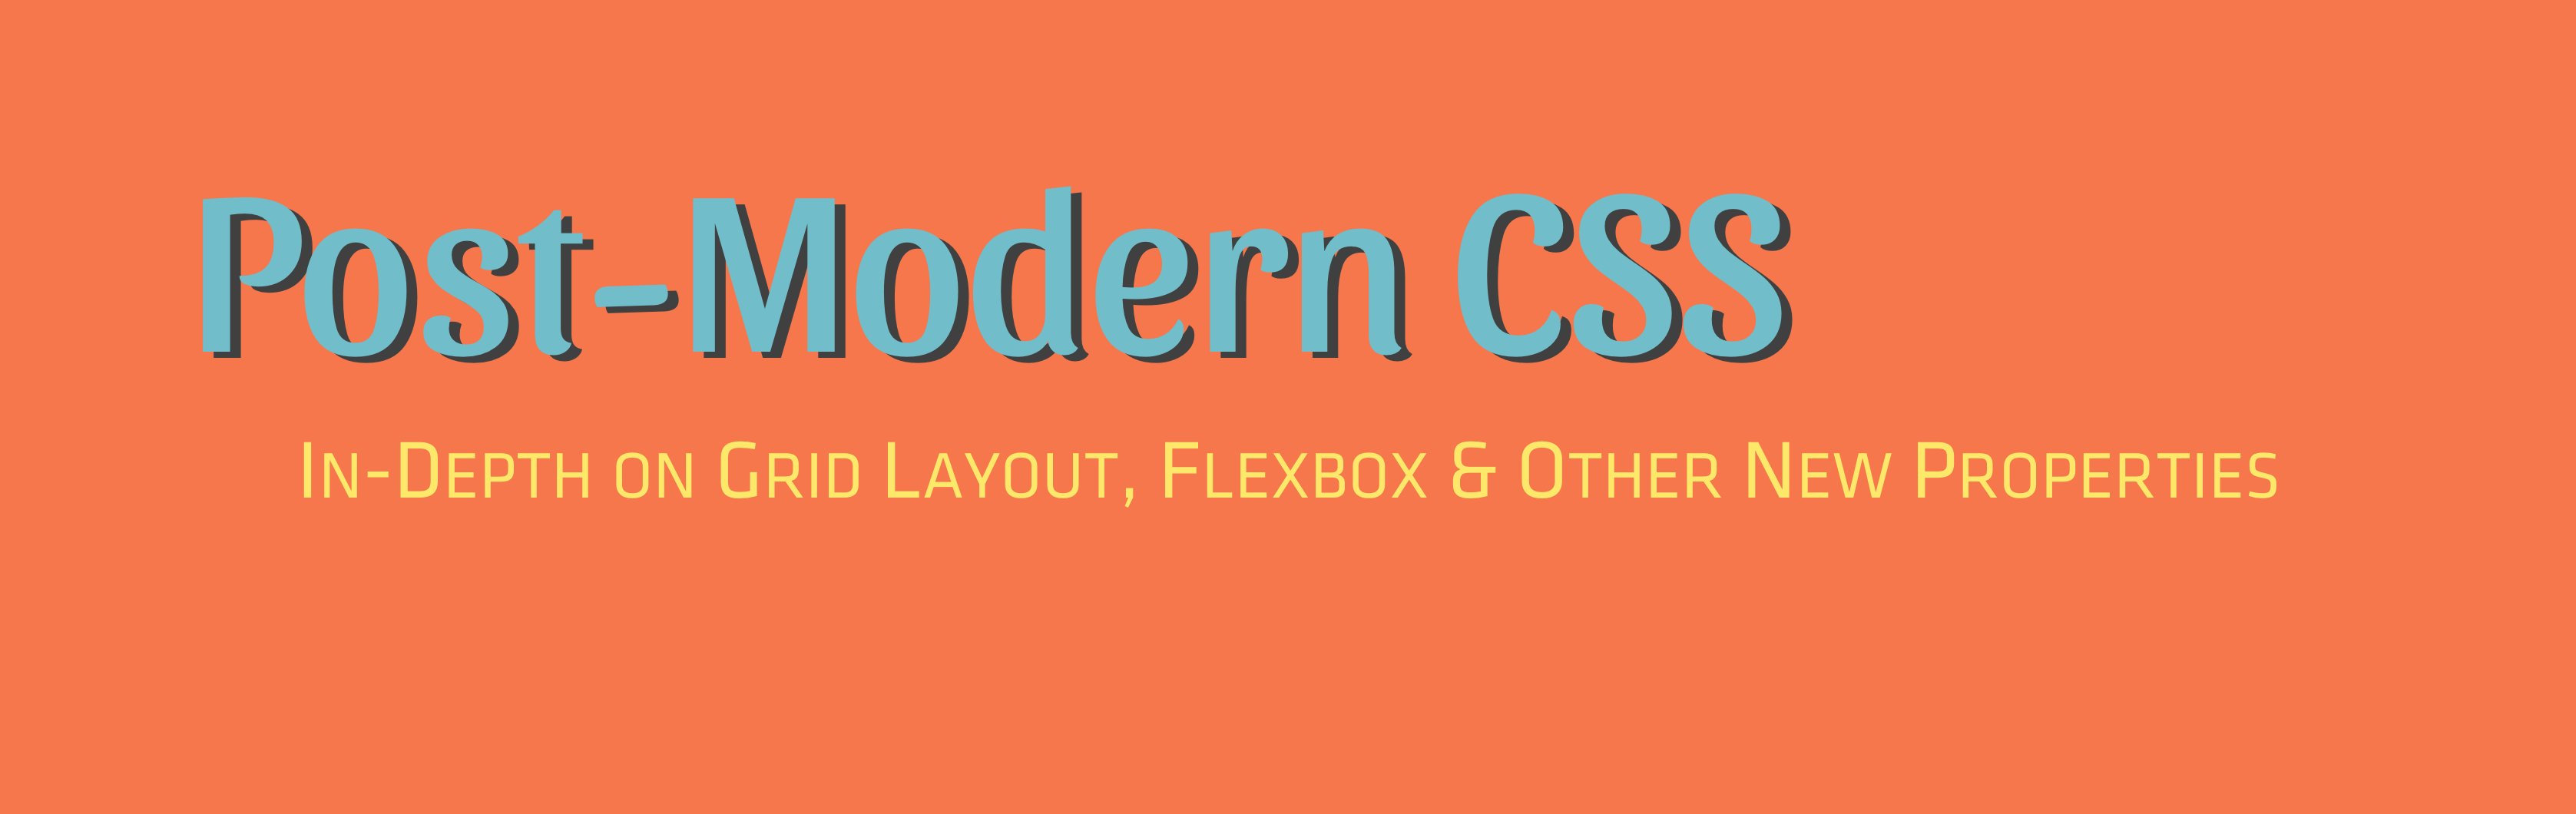 Post-Modern CSS Opening Slide